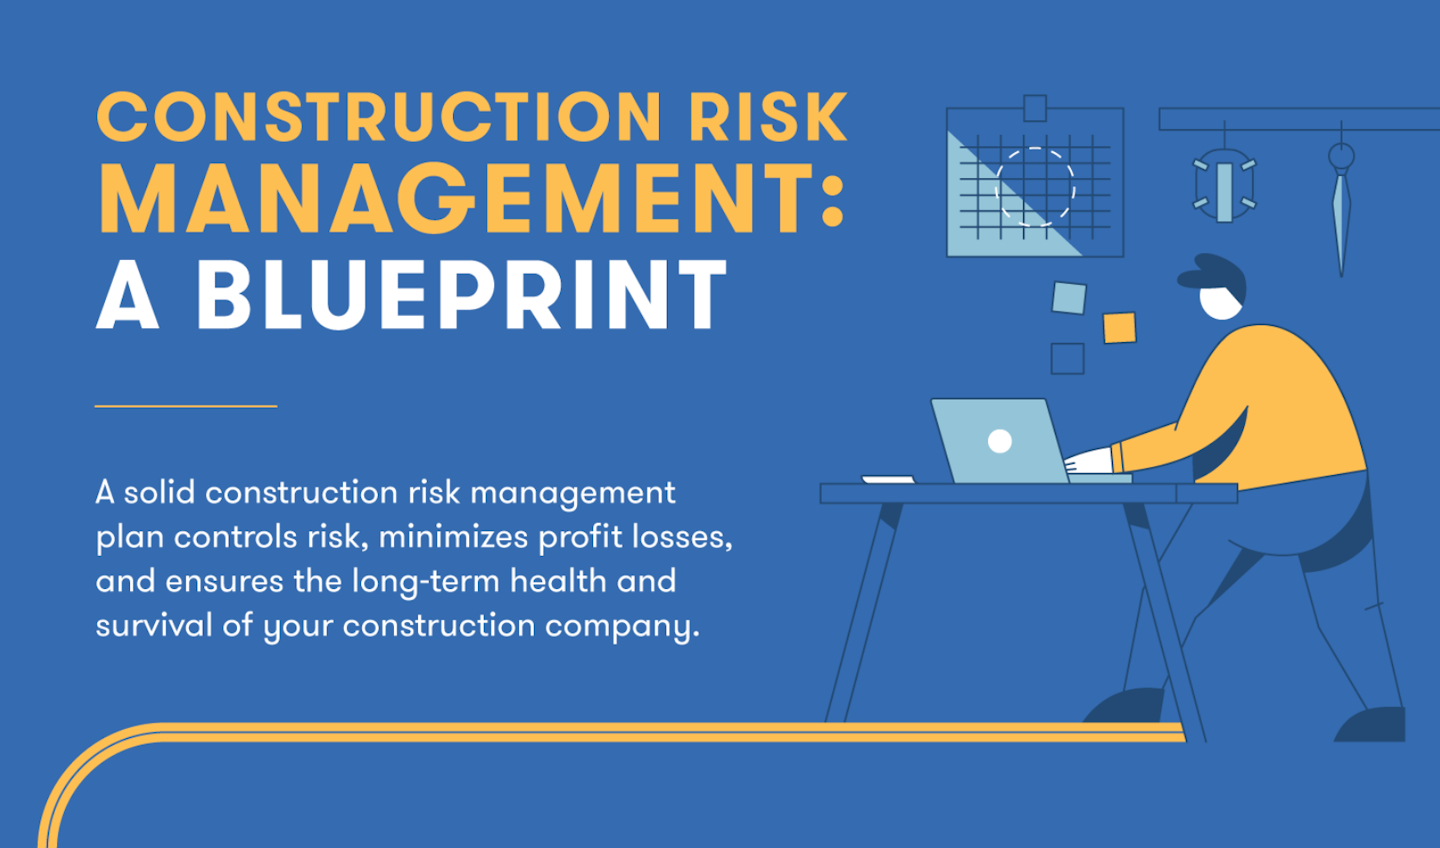 Construction Risk Management For 2019 For Construction Pros